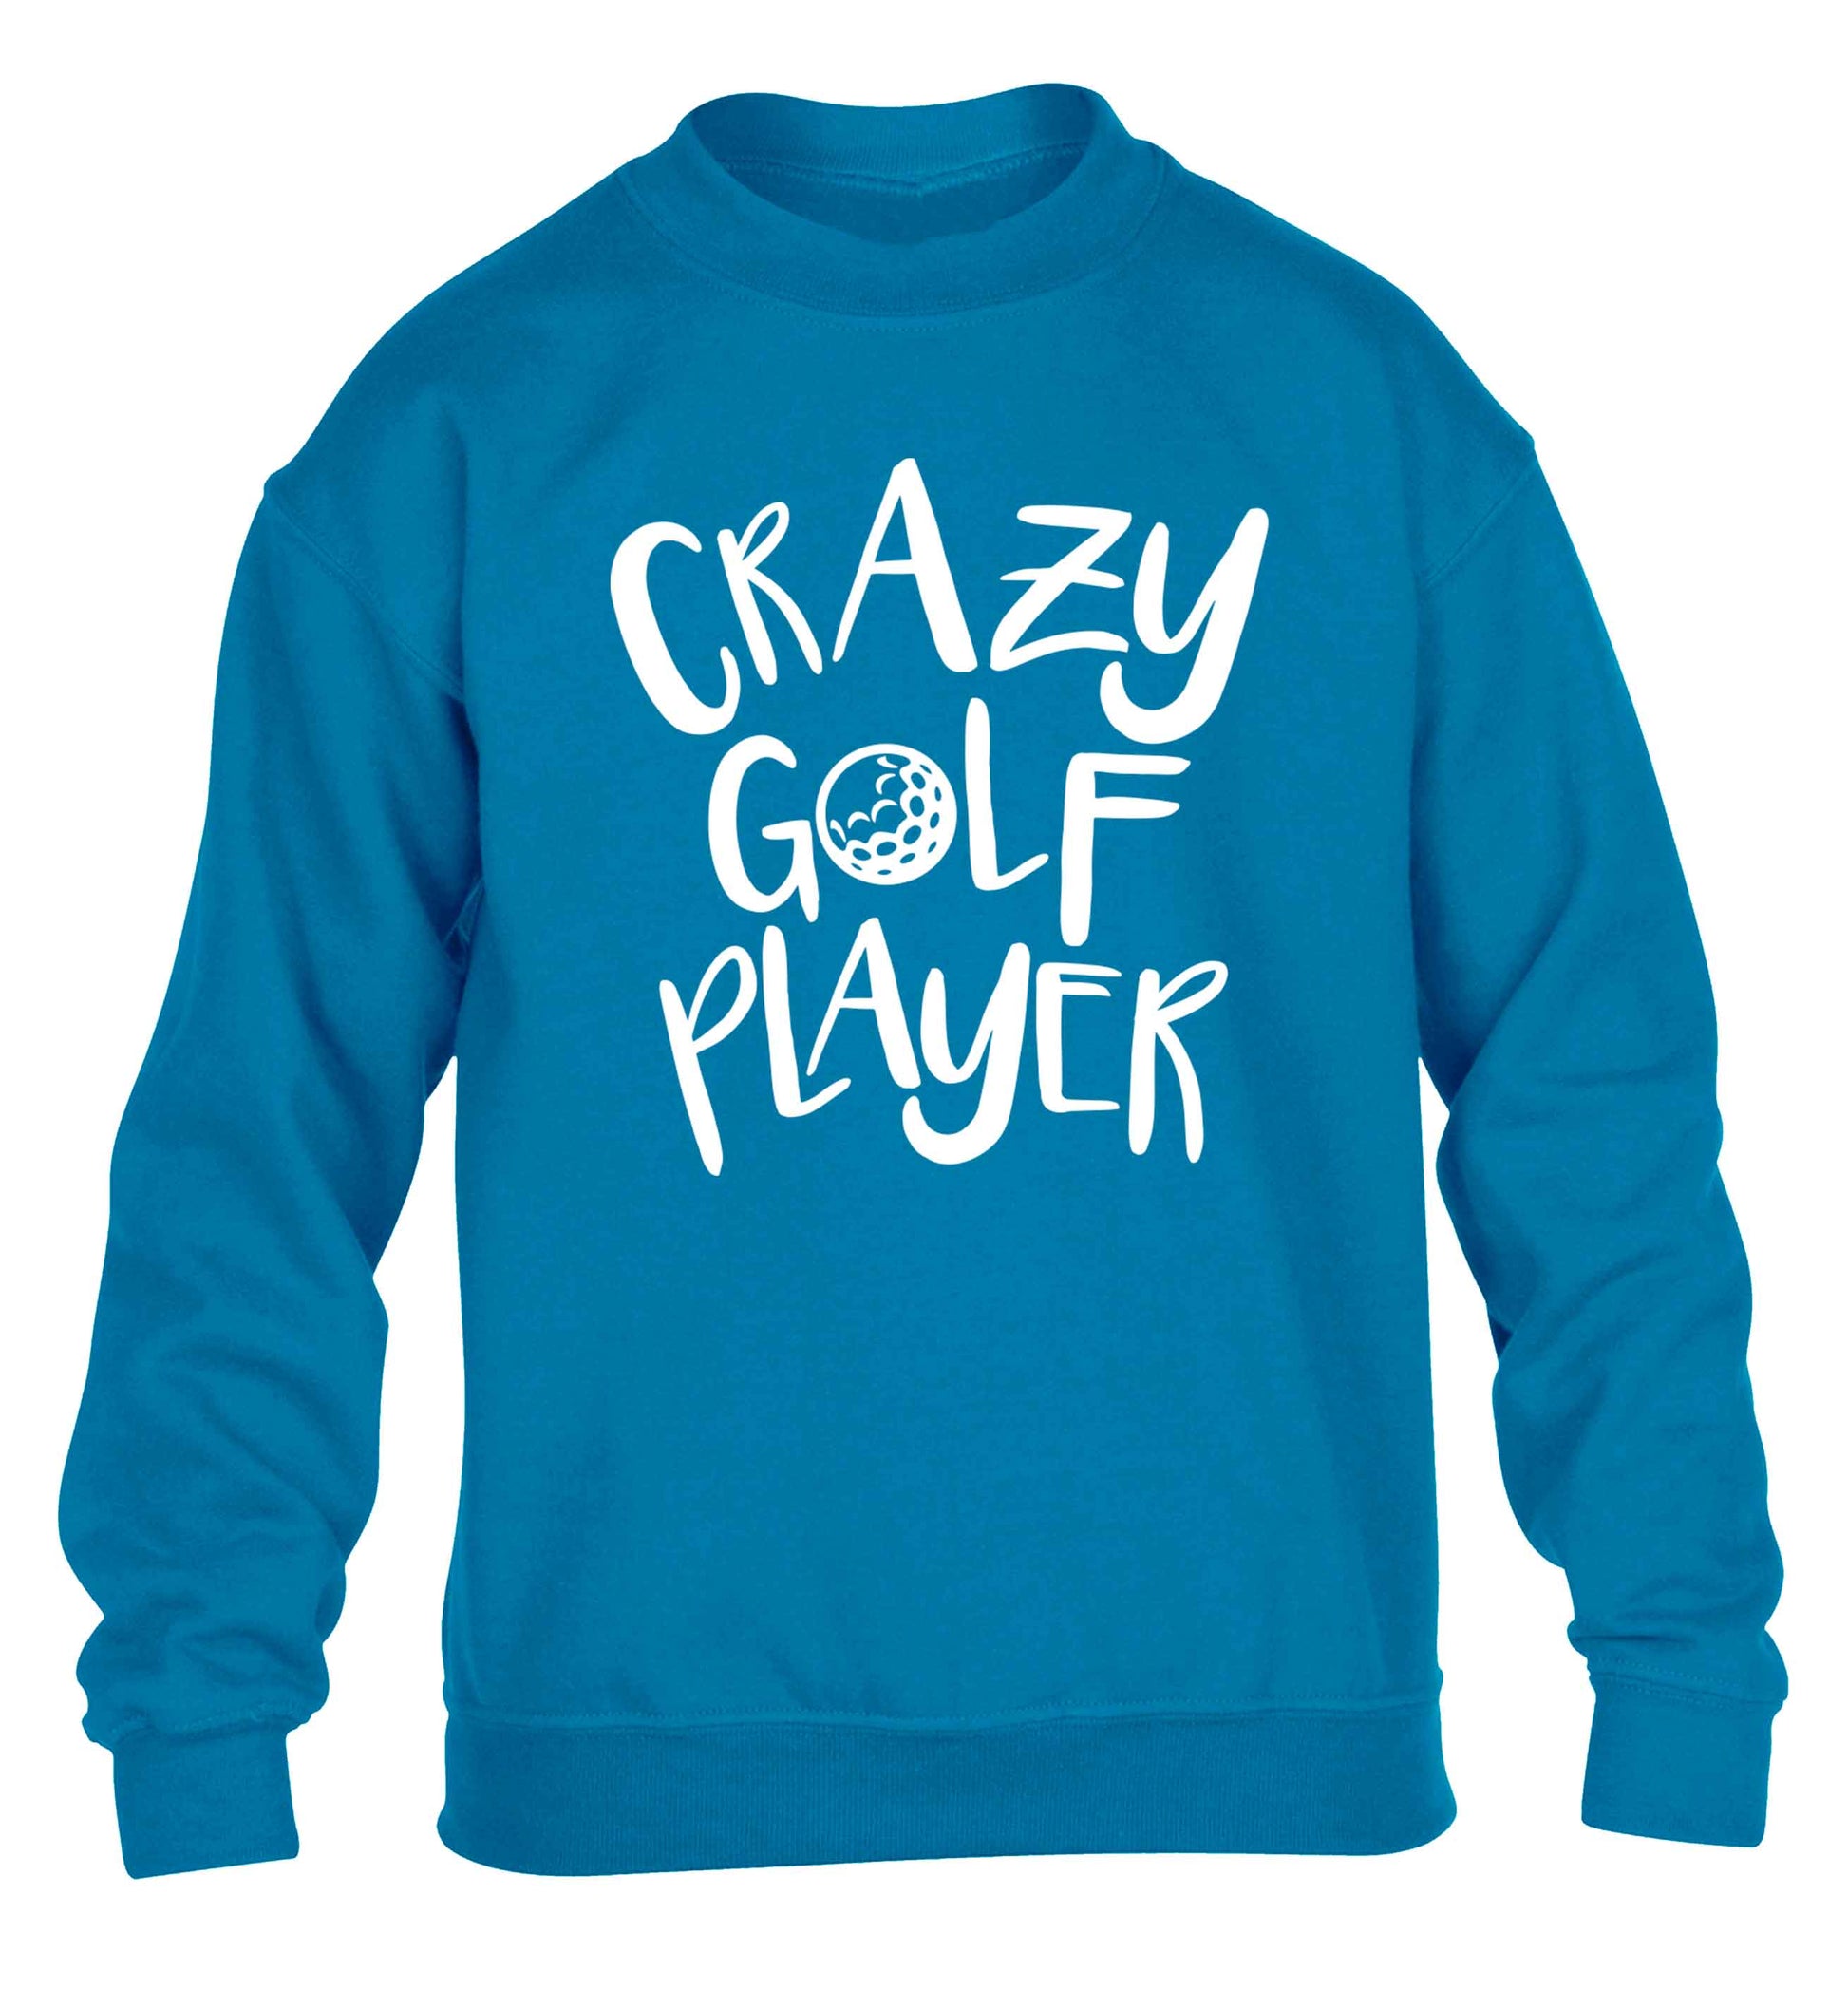 Crazy golf player children's blue sweater 12-13 Years